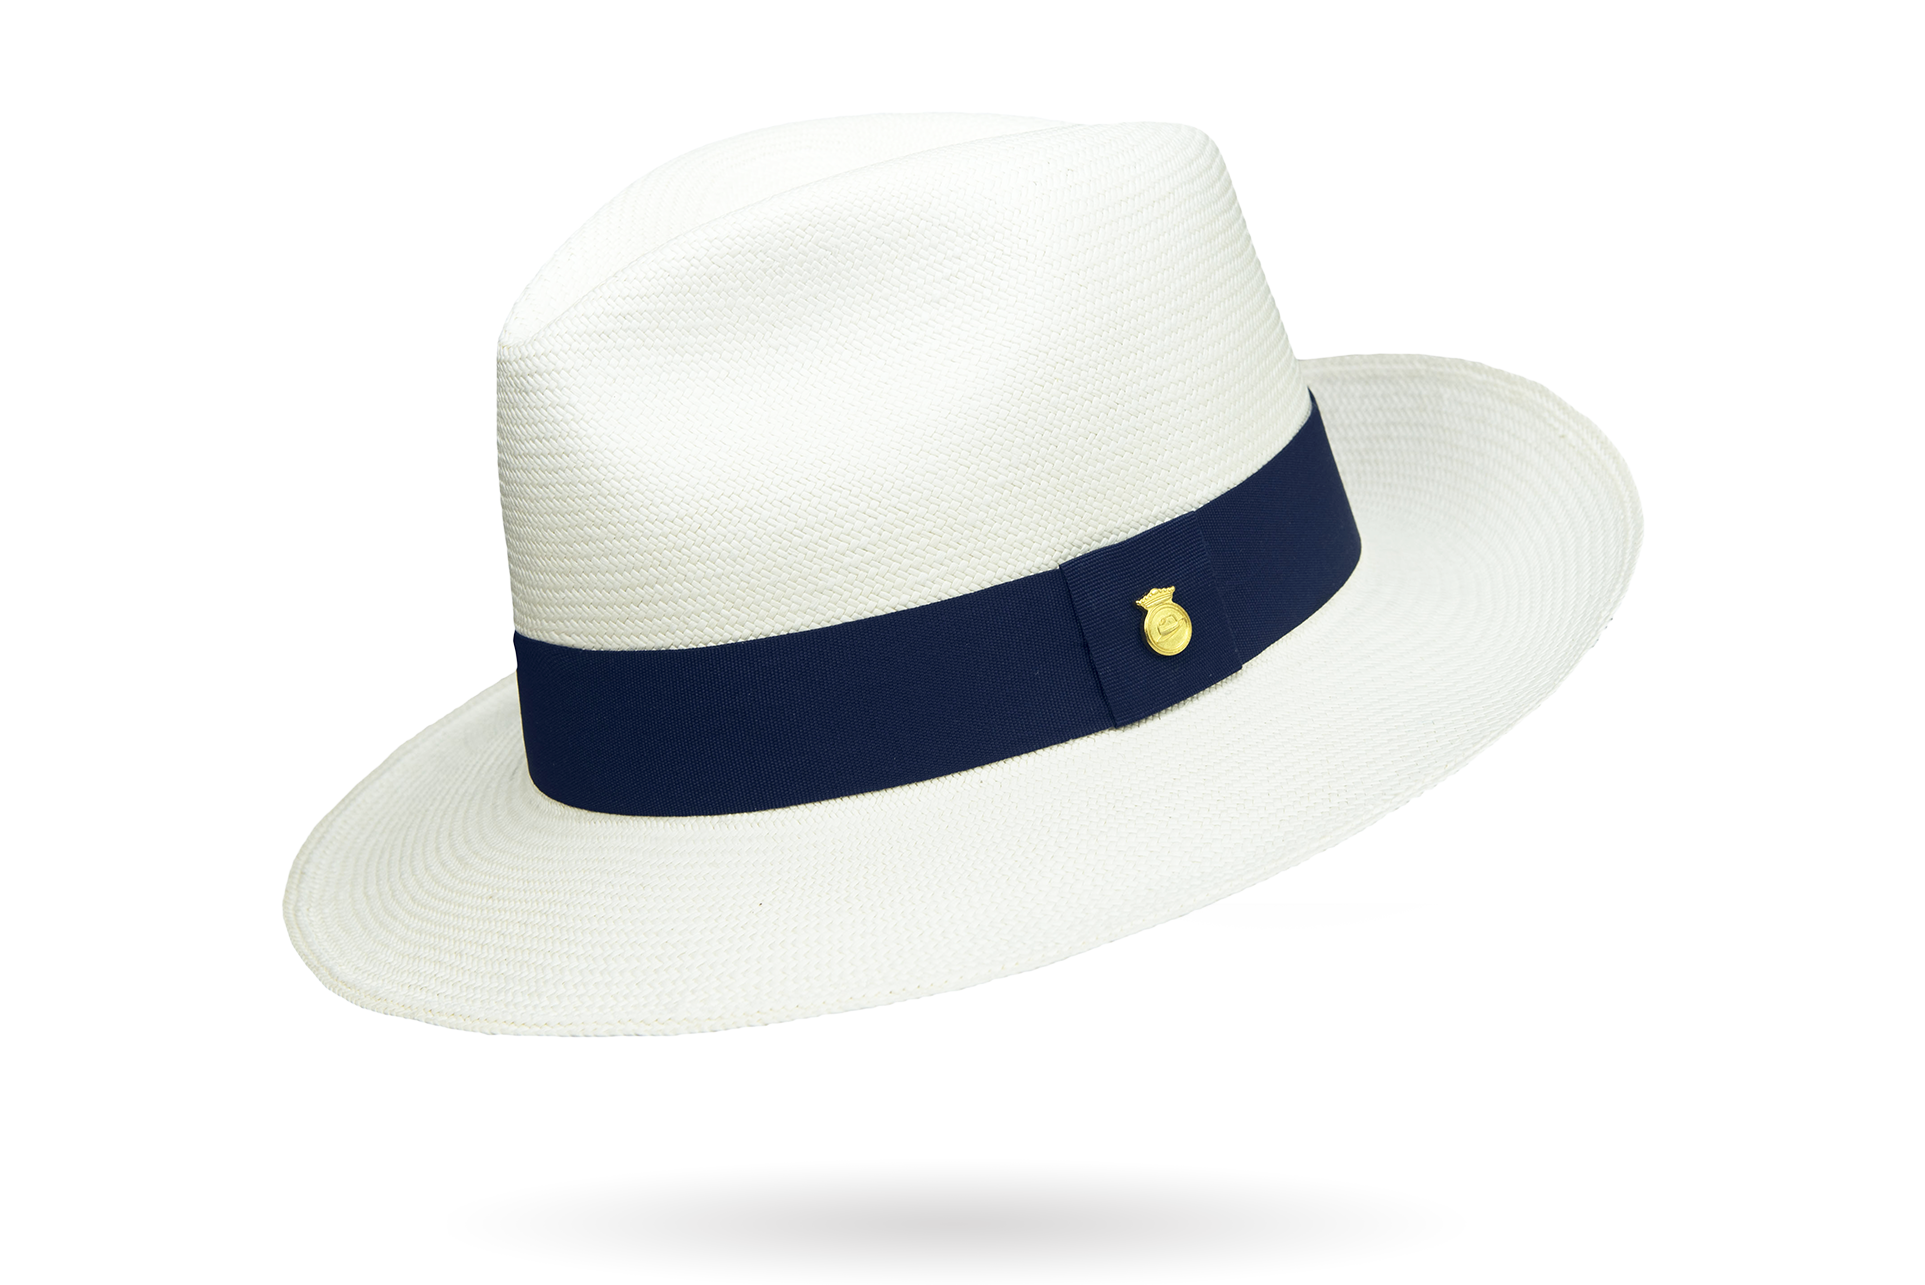 white luxurious panama hat with blue band england